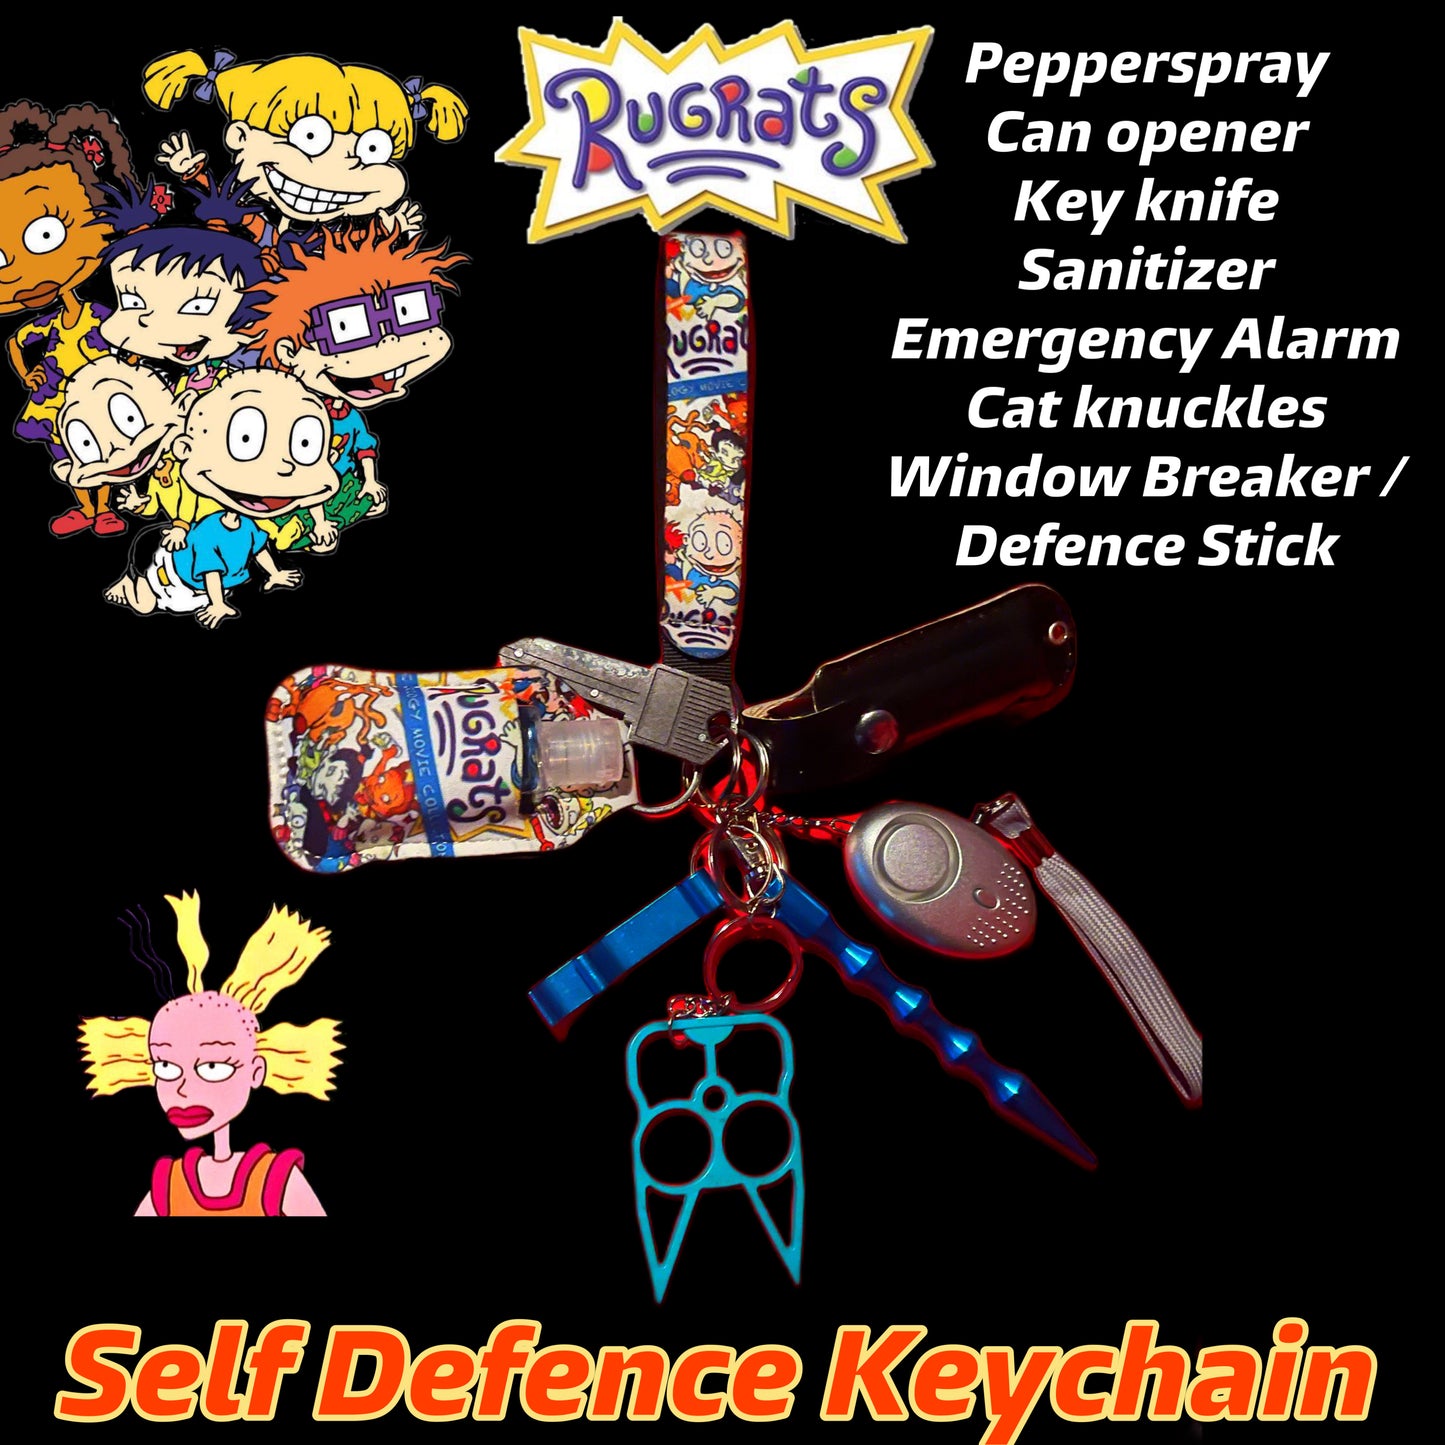 Self defense keychain